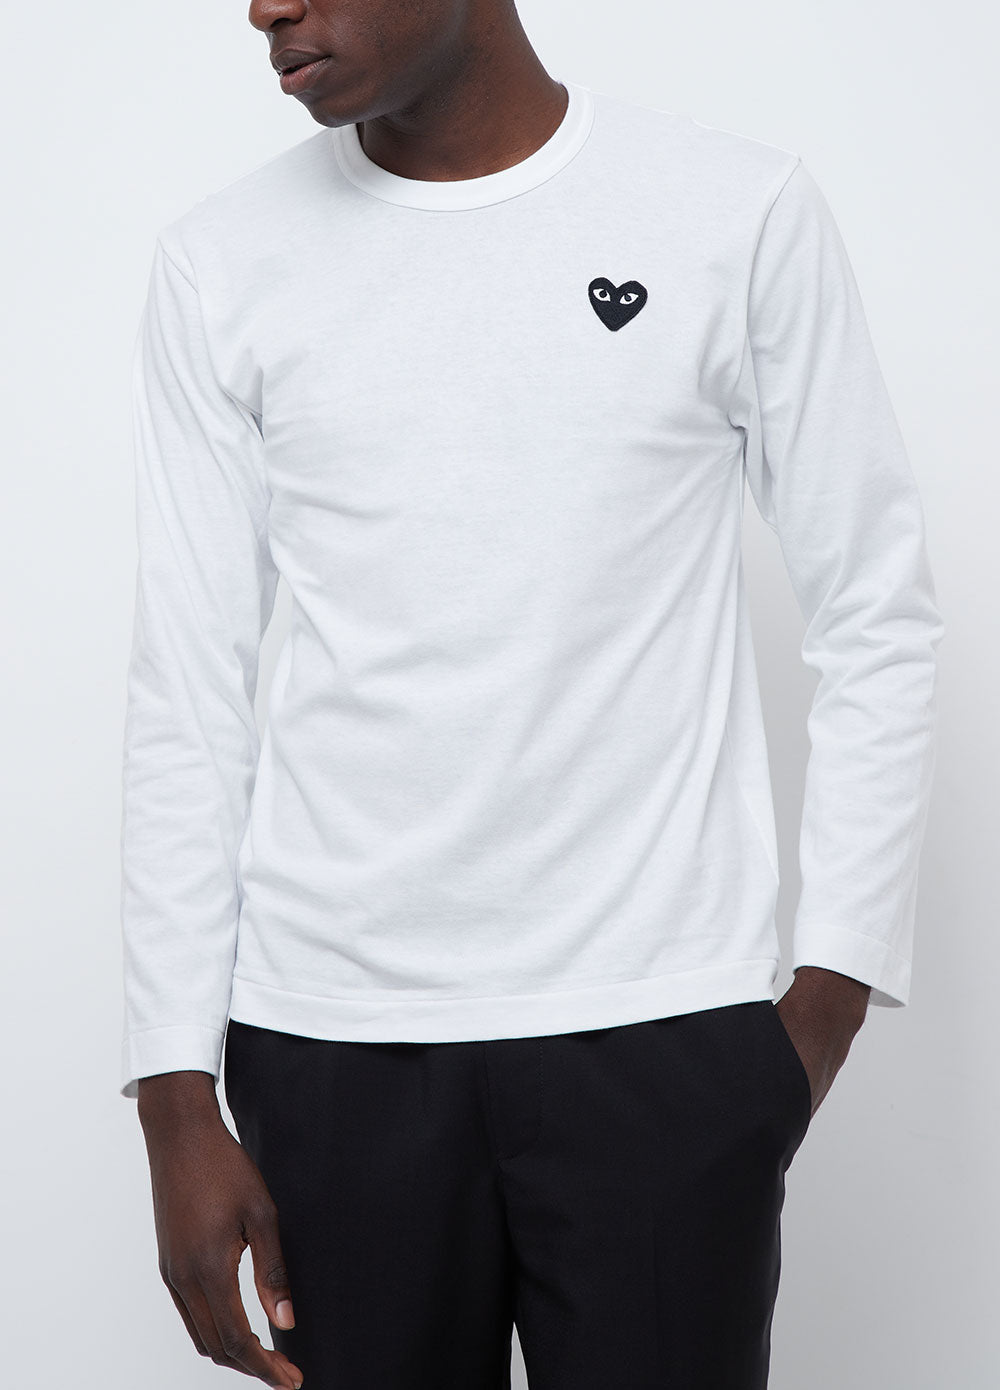 T120 Black Heart Long-Sleeve T-Shirt